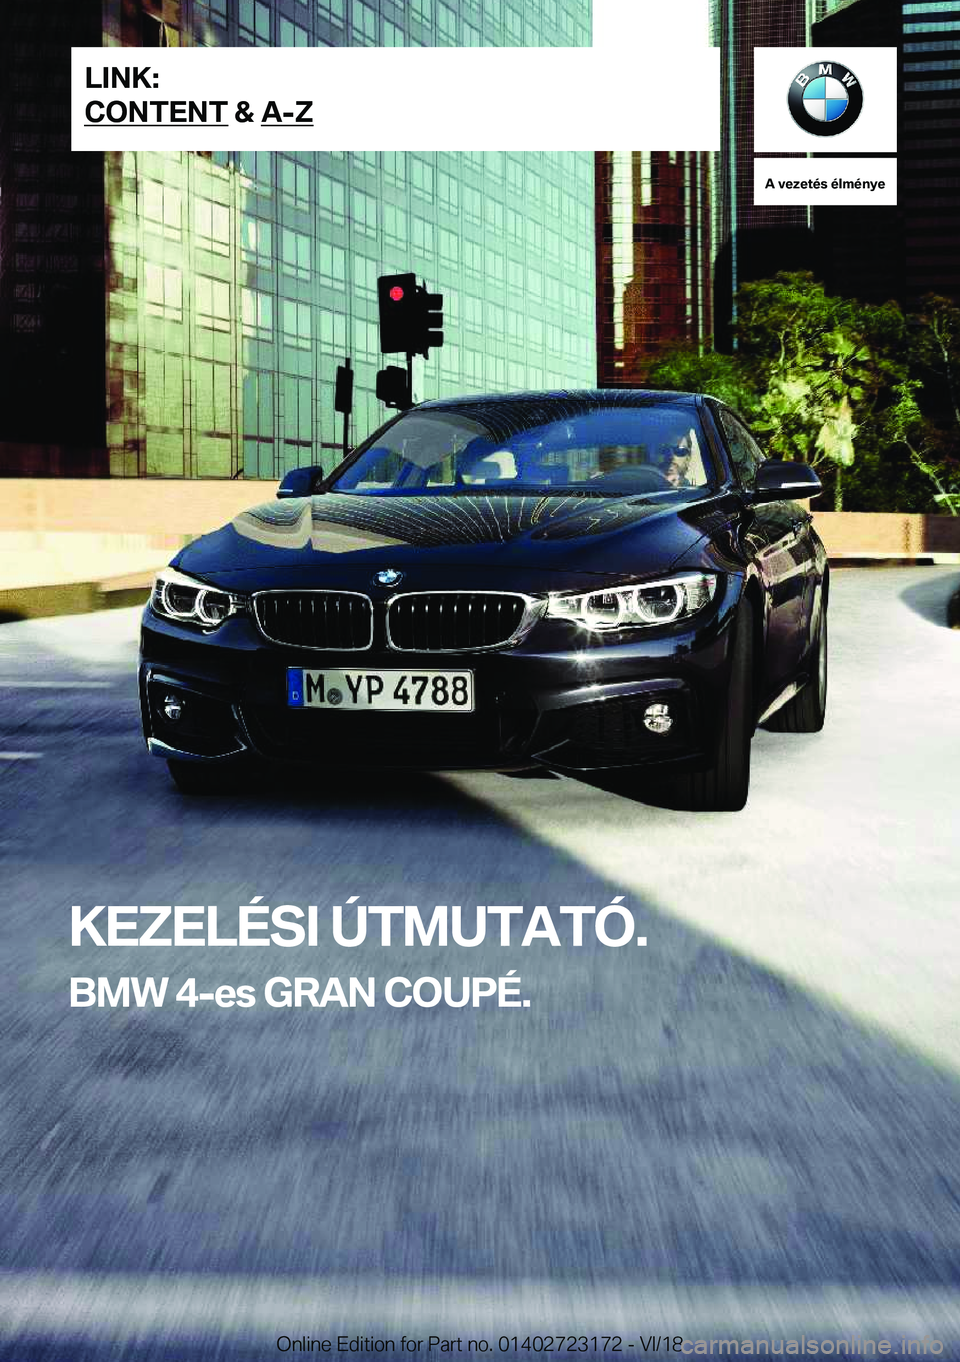 BMW 4 SERIES GRAN COUPE 2019  Kezelési útmutató (in Hungarian) �A��v�e�z�e�t�